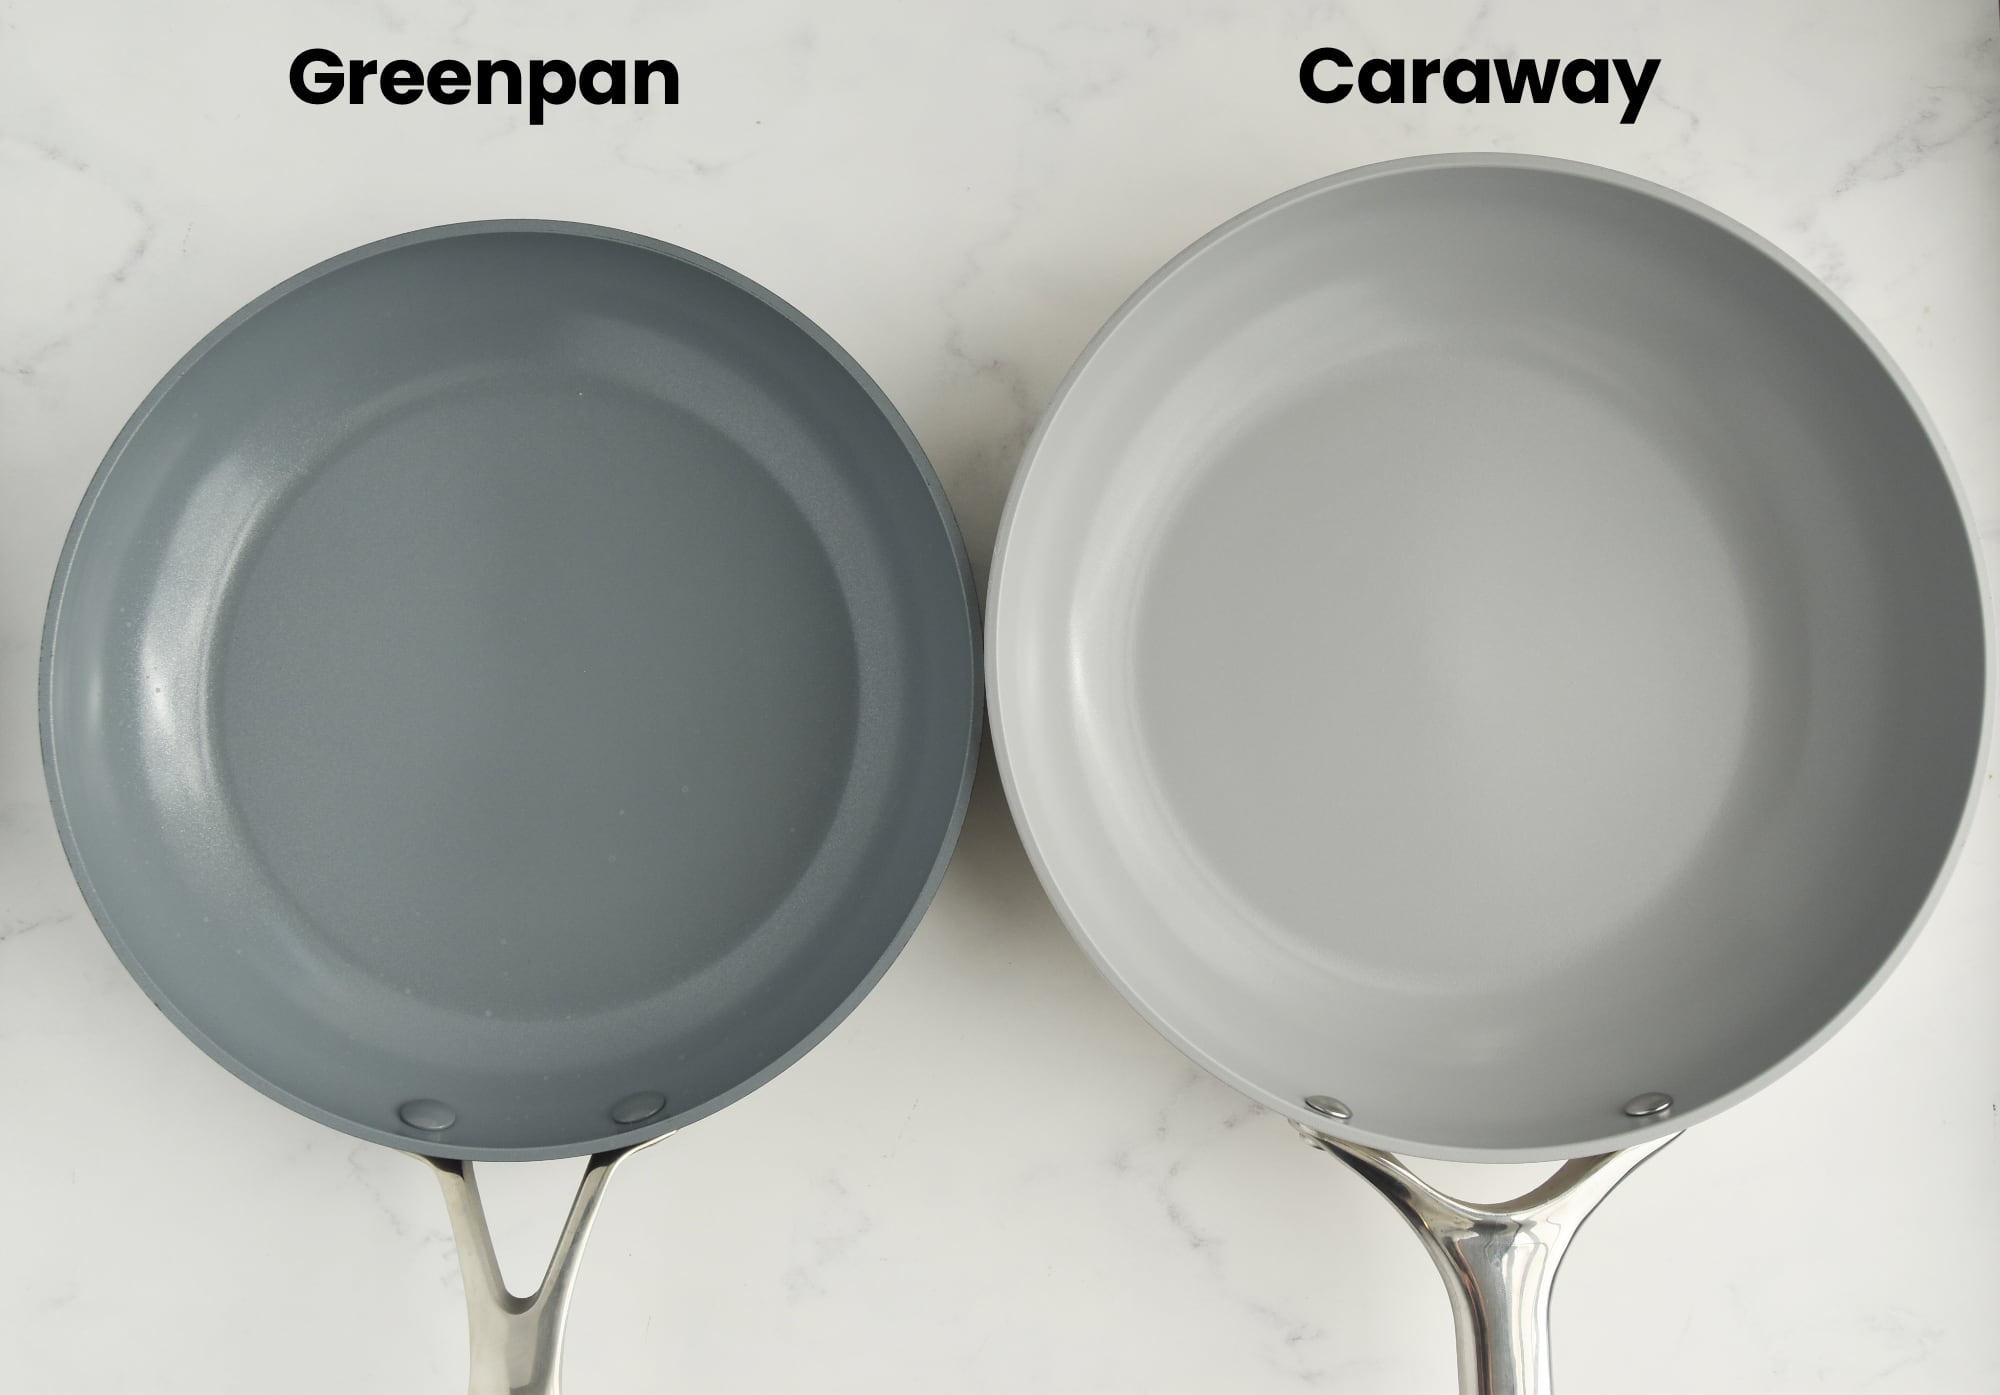 A comparison of greenpan vs caraway.